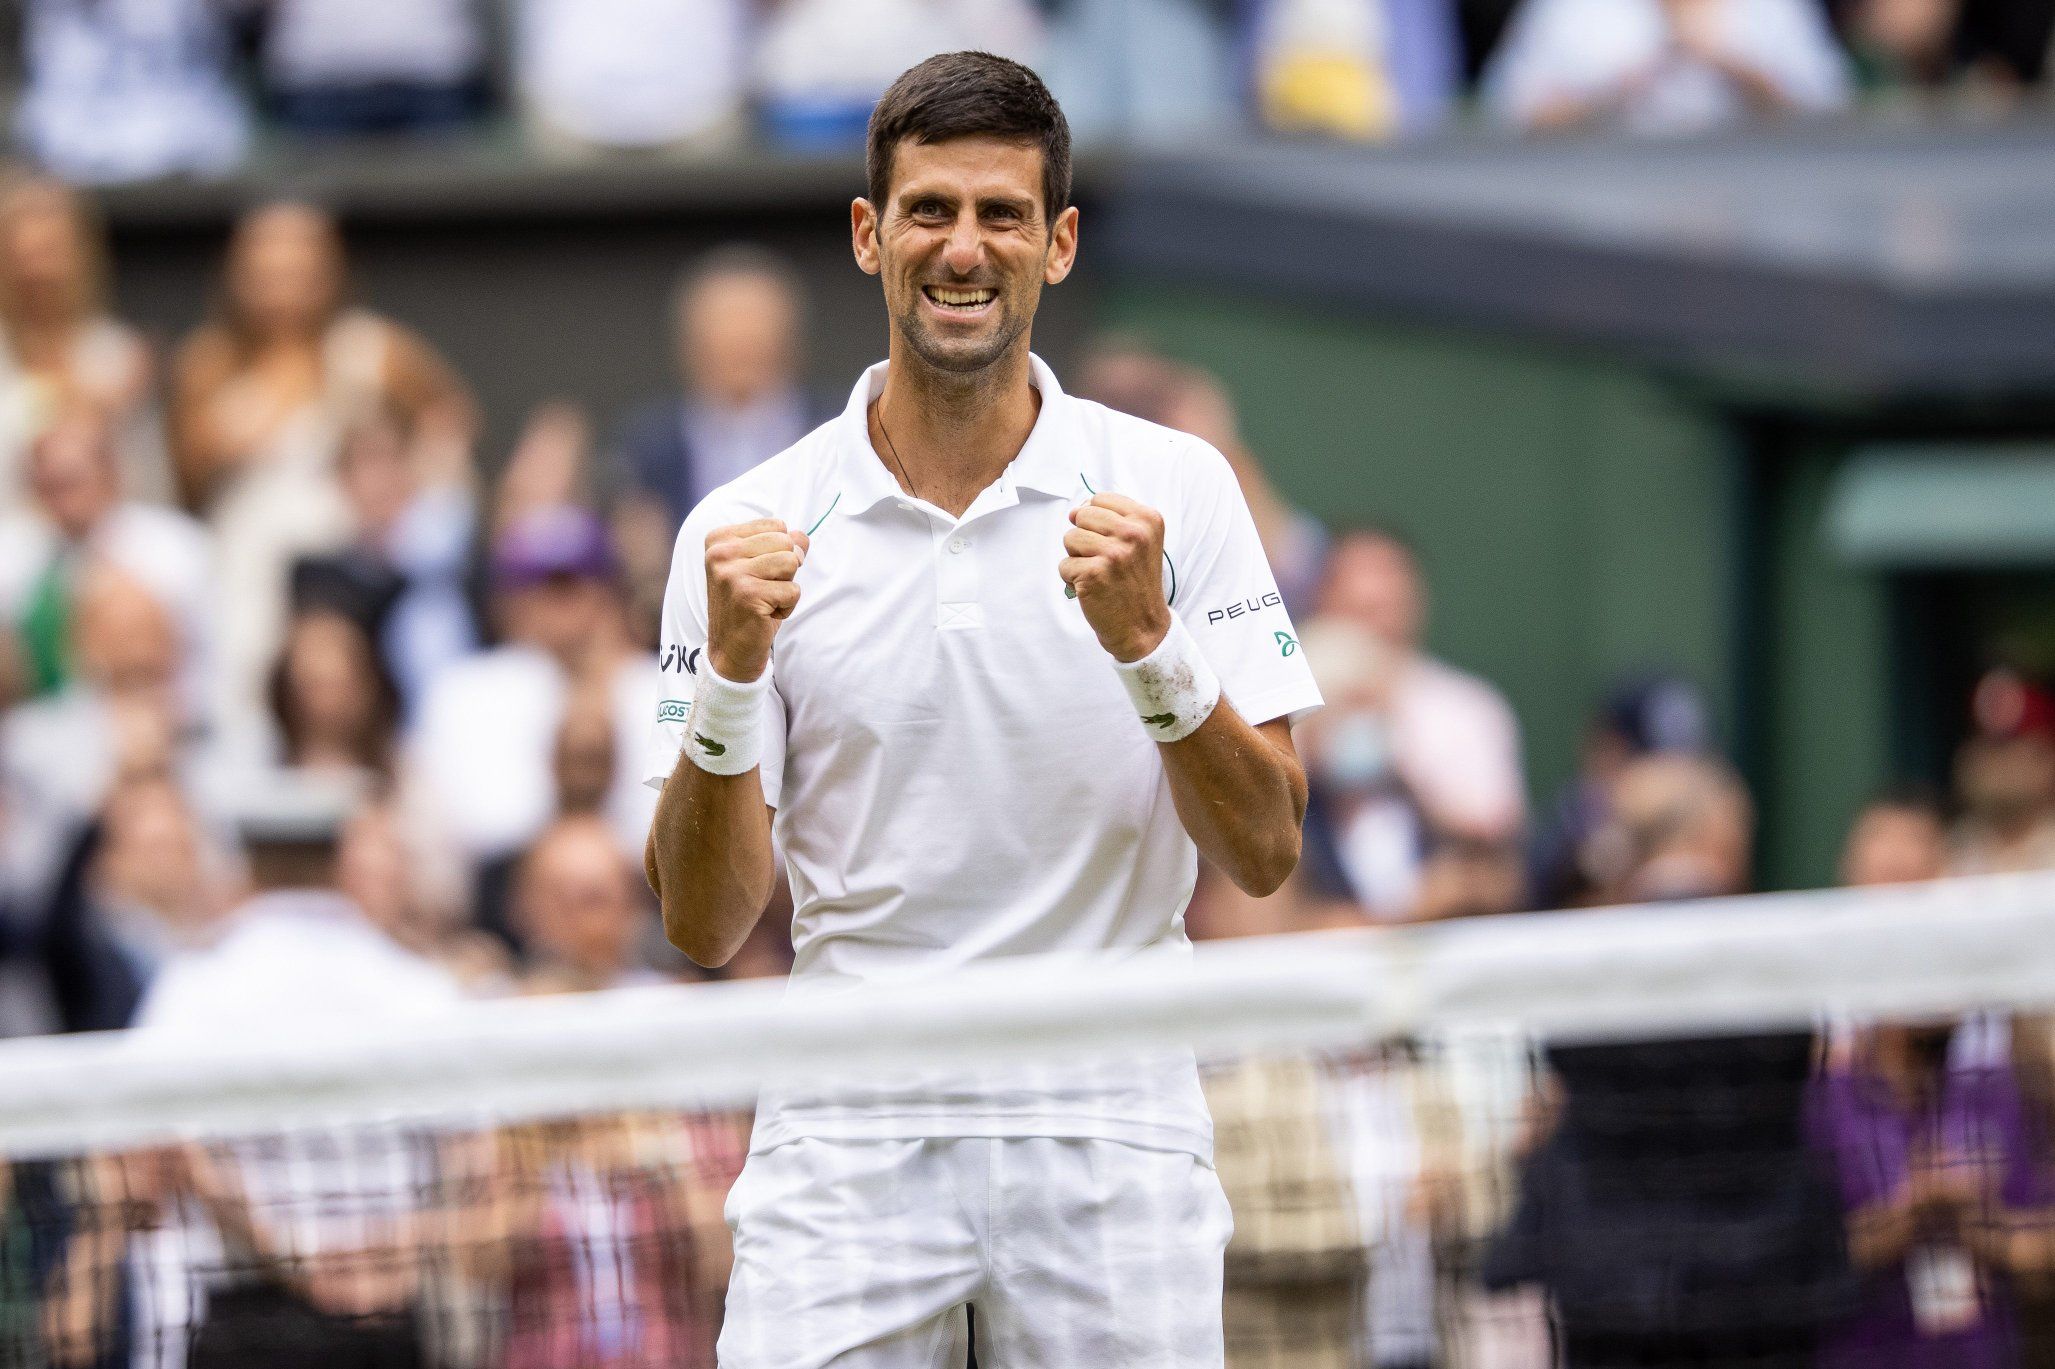 How to watch for free Novak Djokovic vs Thanasi Kokkinakis Wimbledon 2022 and on TV, @03:30 PM